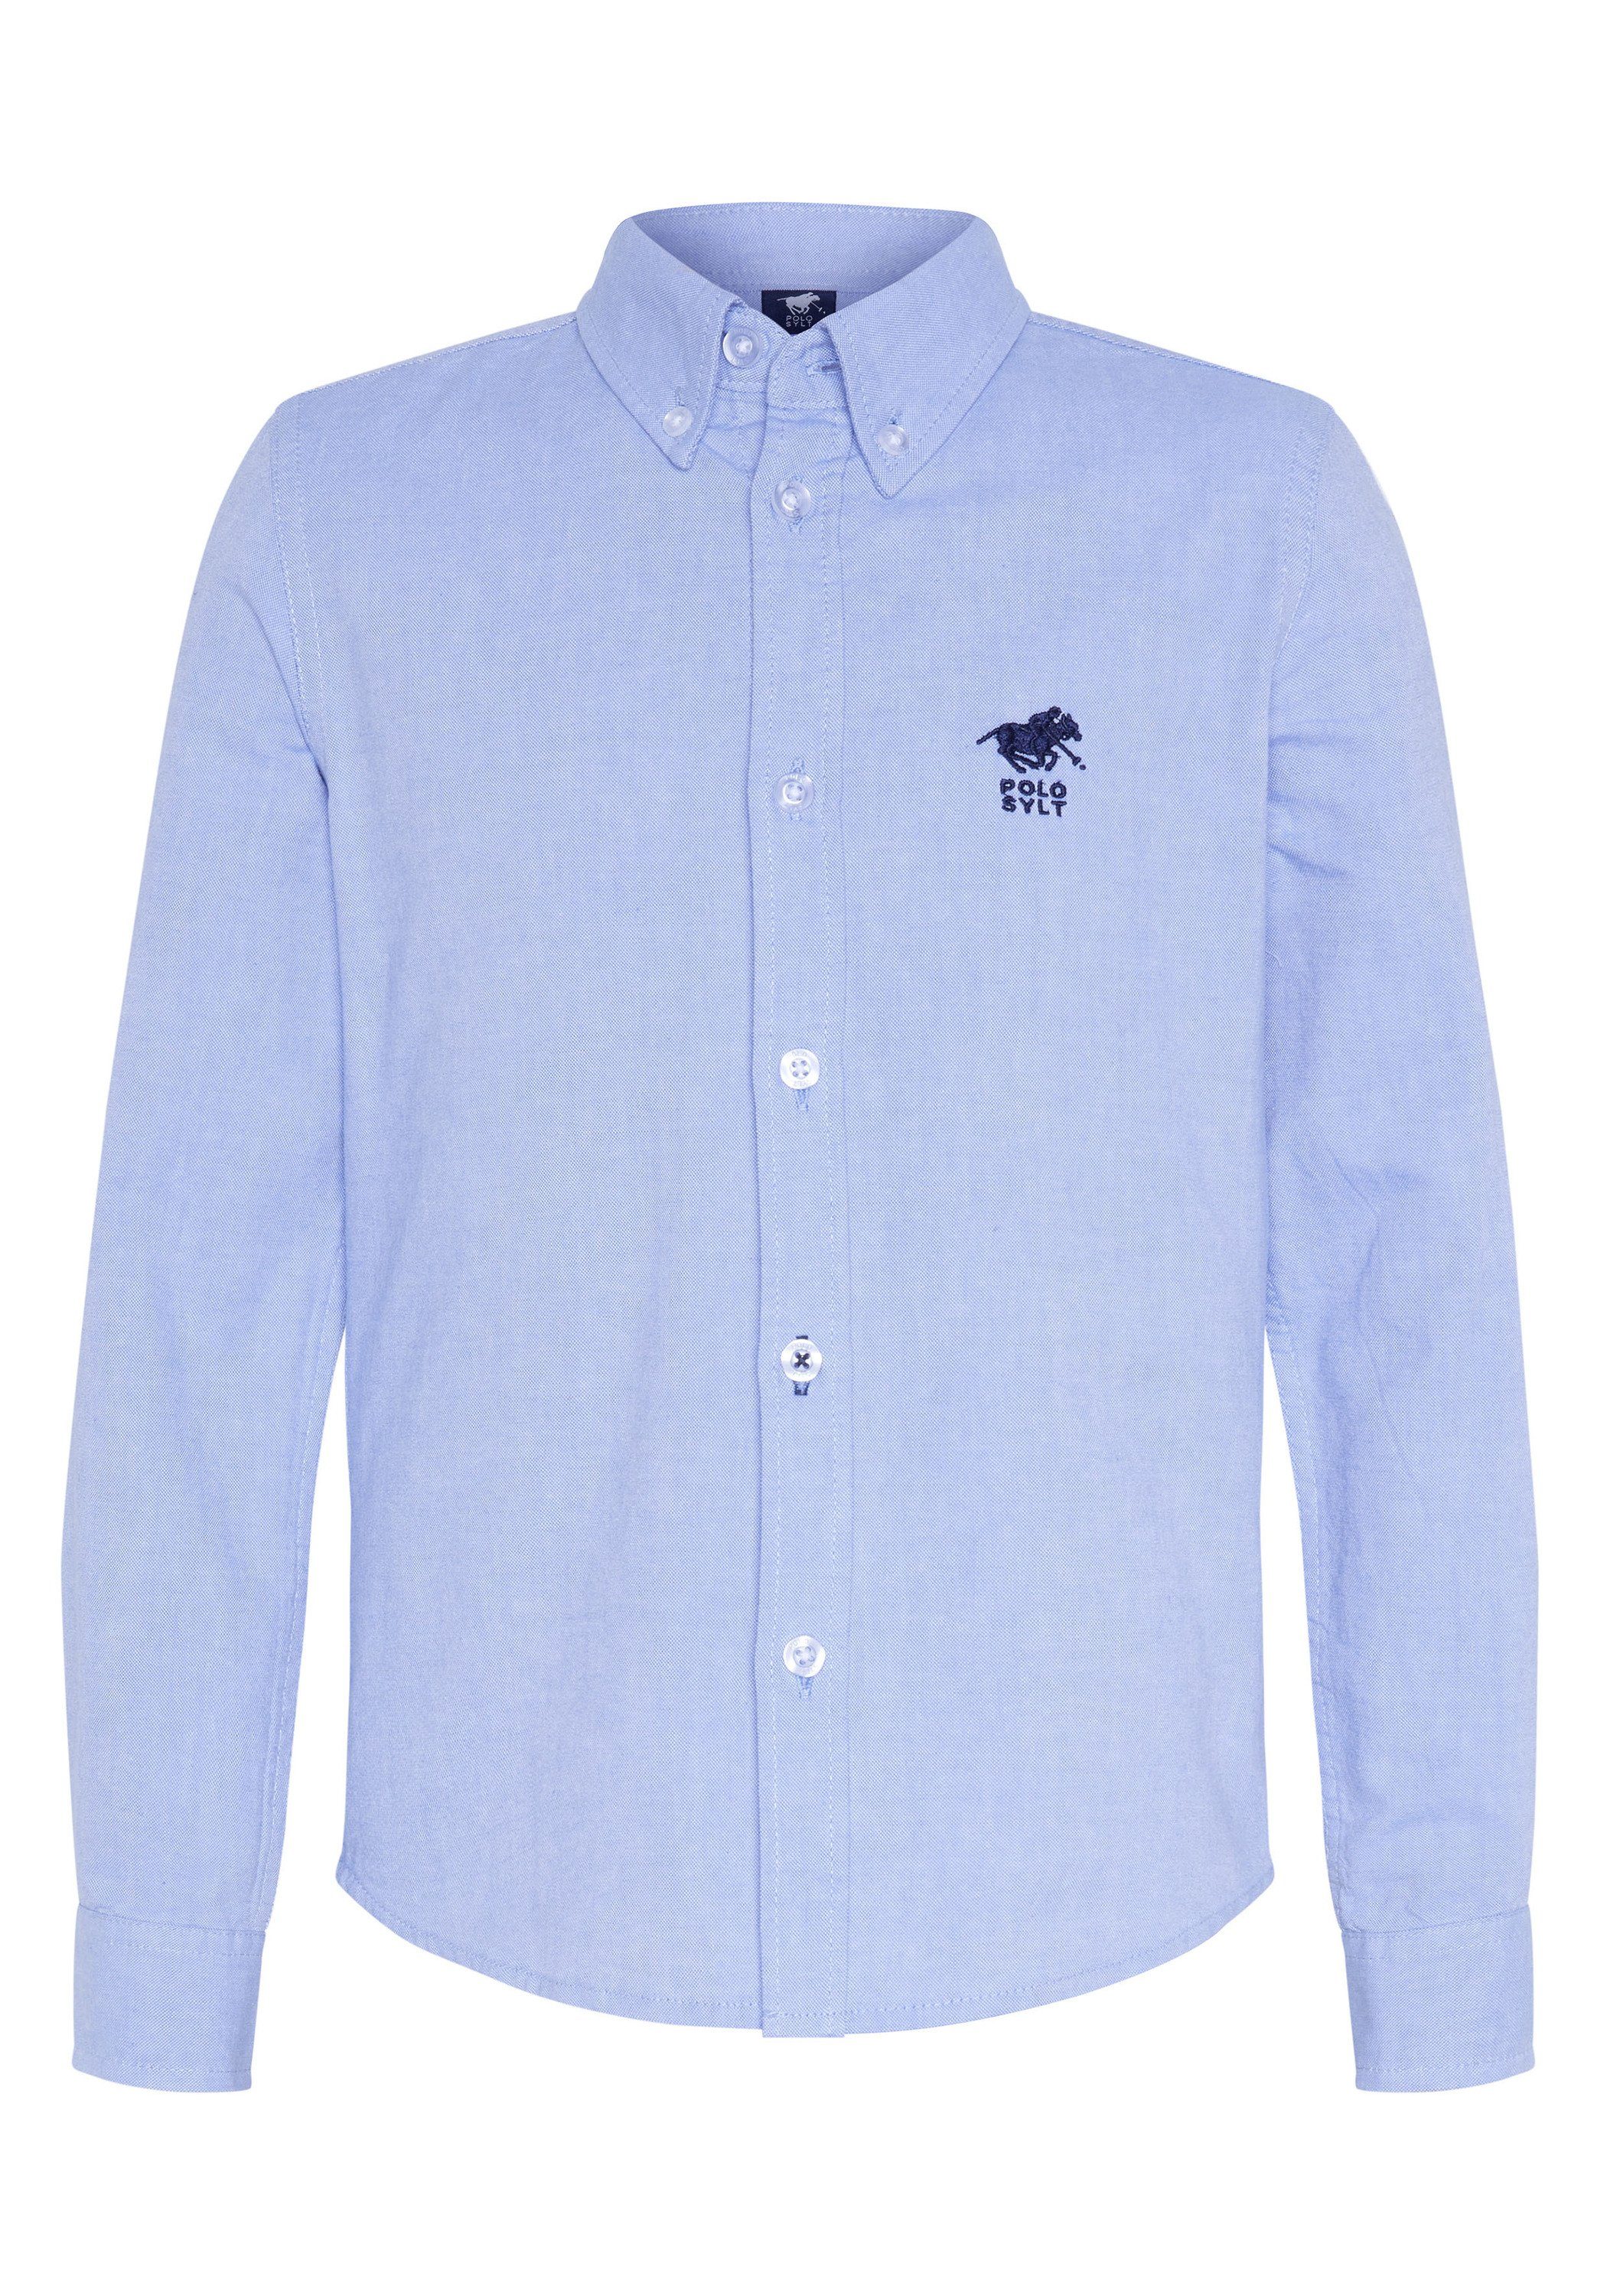 Brunnera Blue Oxford Sylt aus Qualität Langarmhemd Polo 16-3922